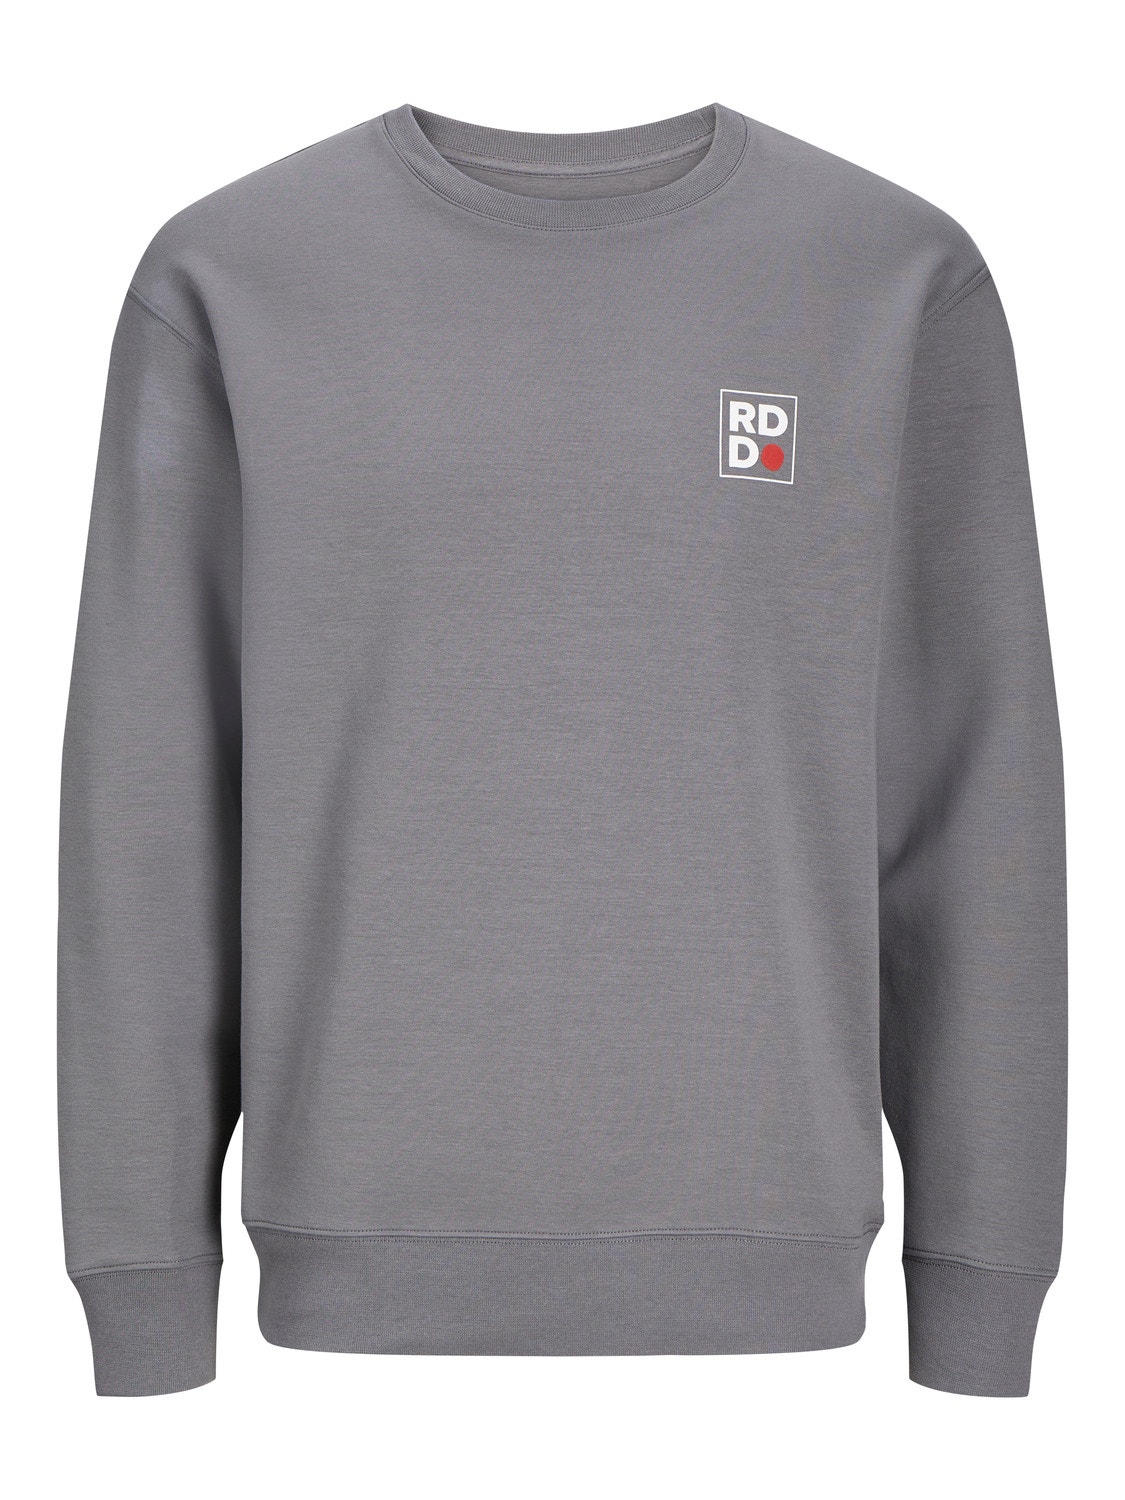 Jack & Jones RDD Logo Crewn Neck Sweatshirt -Charcoal Gray - 12230356